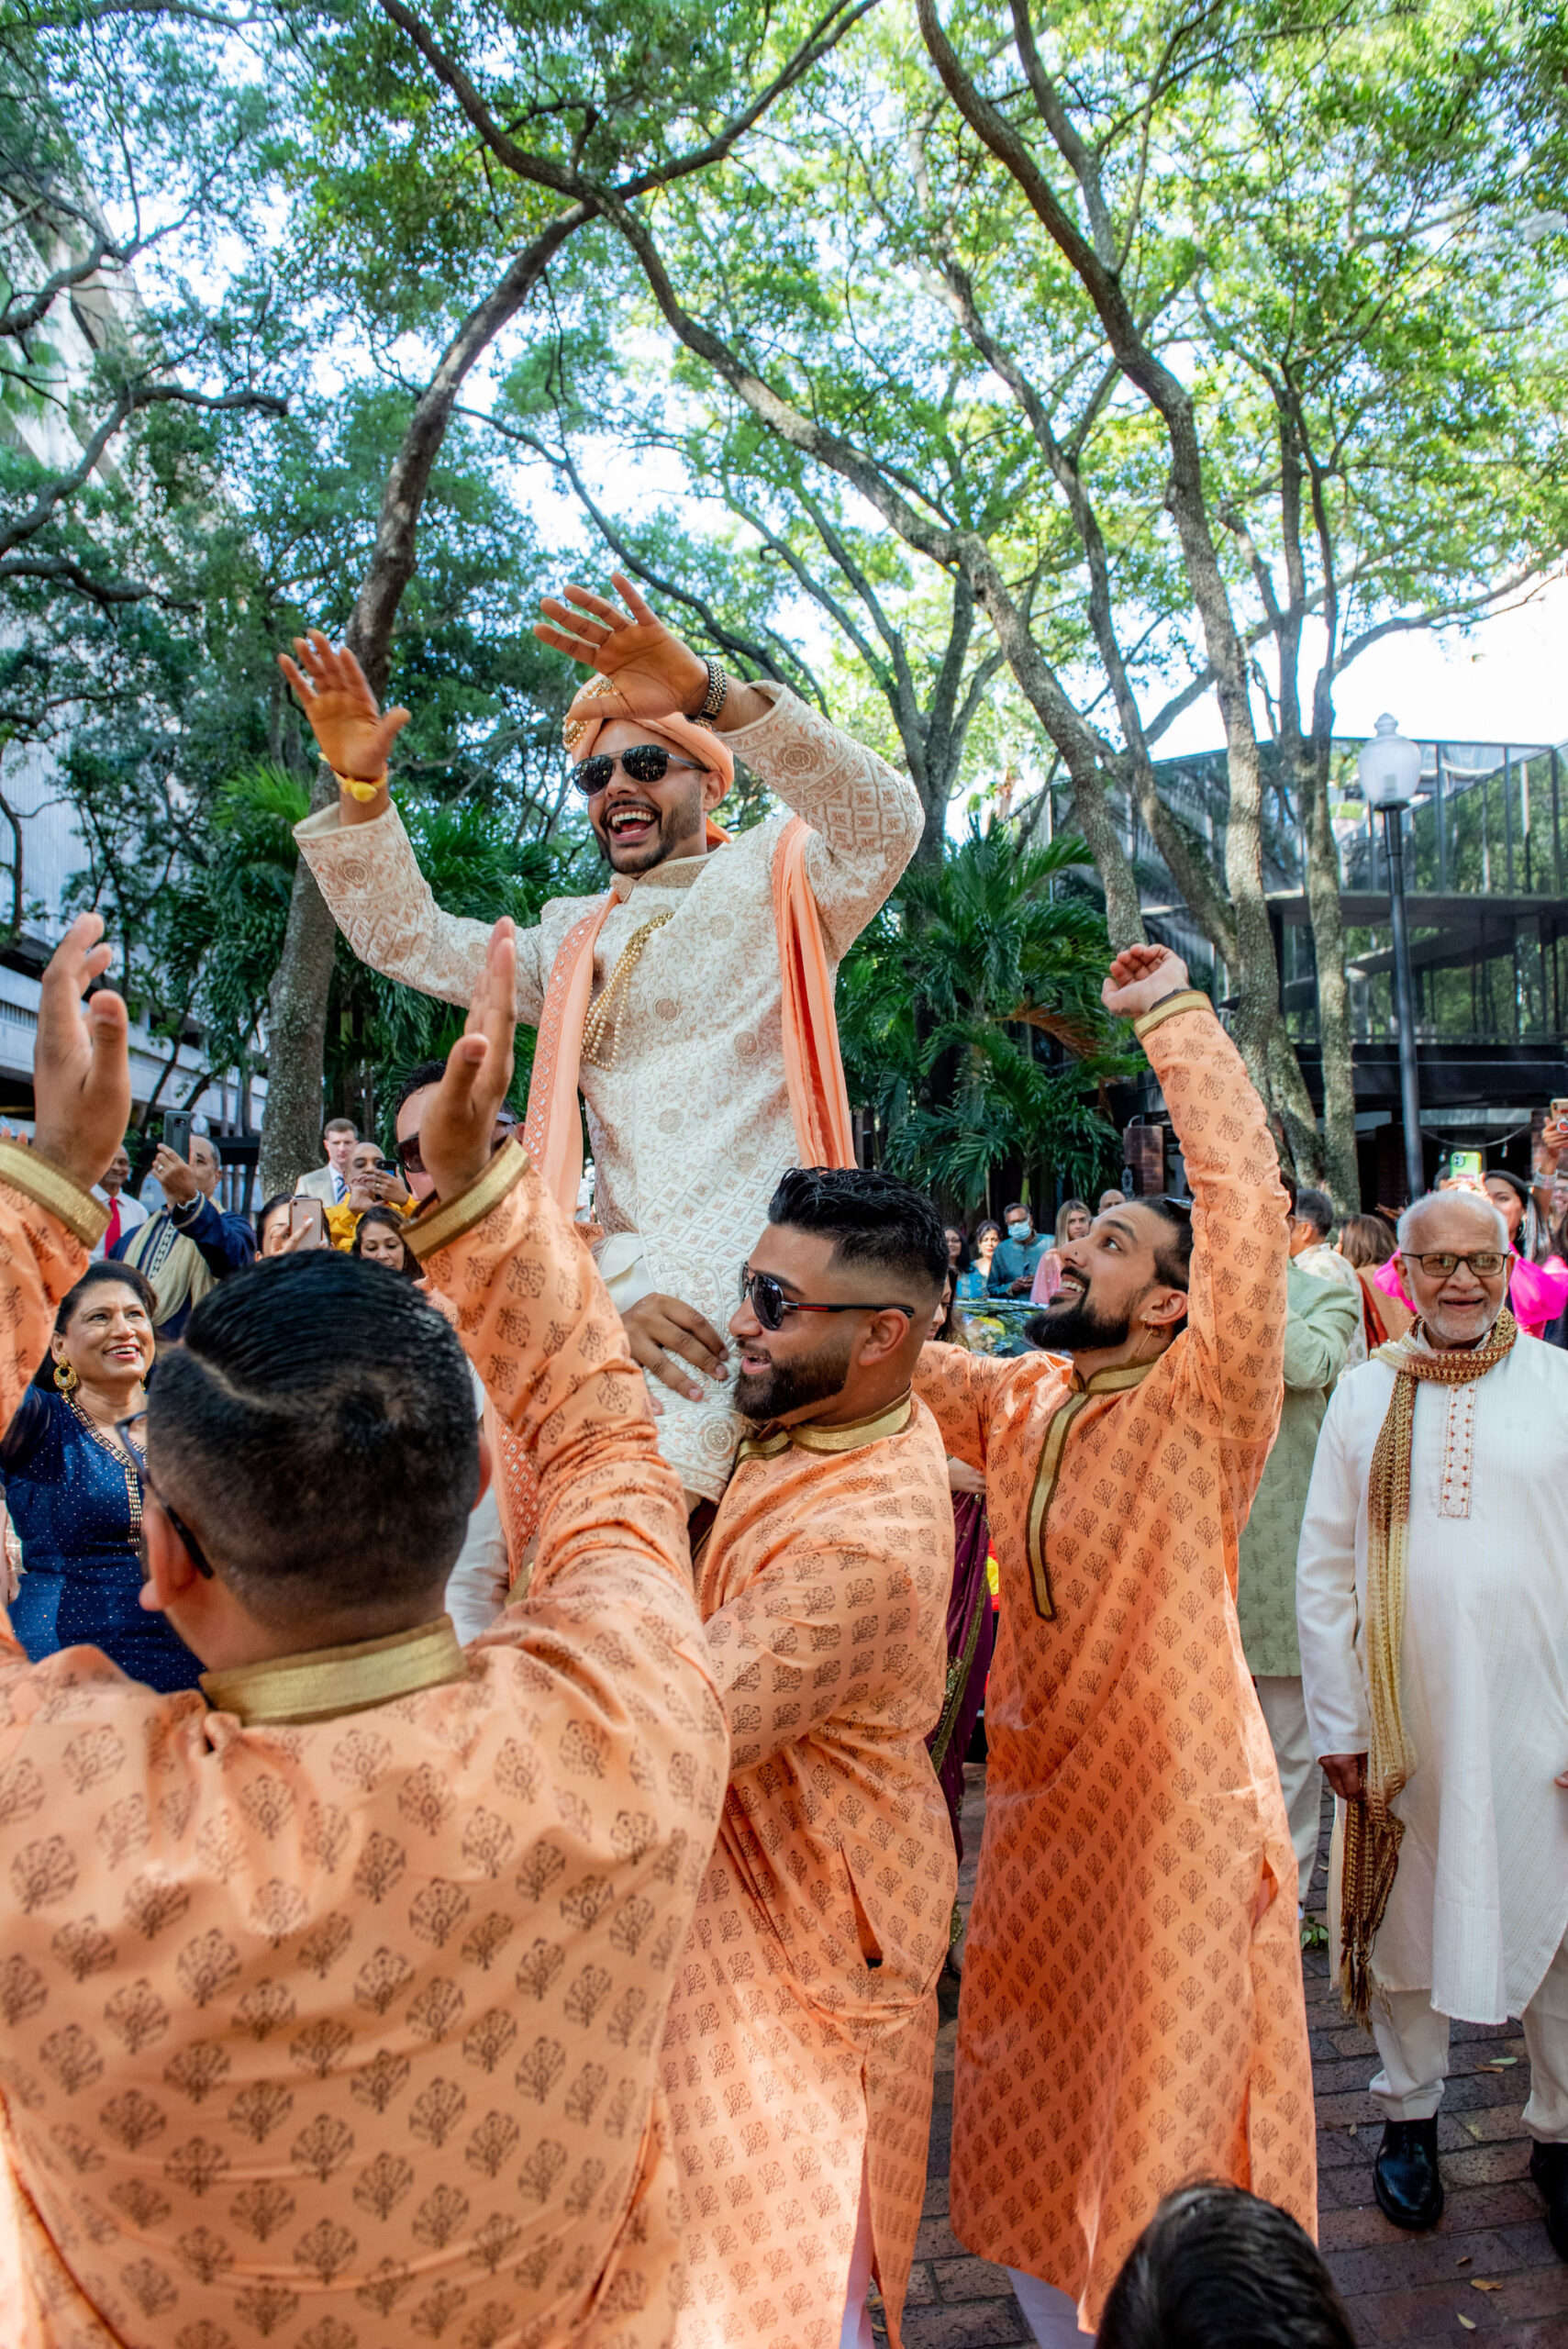 Florida Groom Baraat in Traditional Indian Wedding Entrace, Wearing Kurta in Gold, Coral |Tampa Bay Wedding Venue Hilton Downtown Tampa